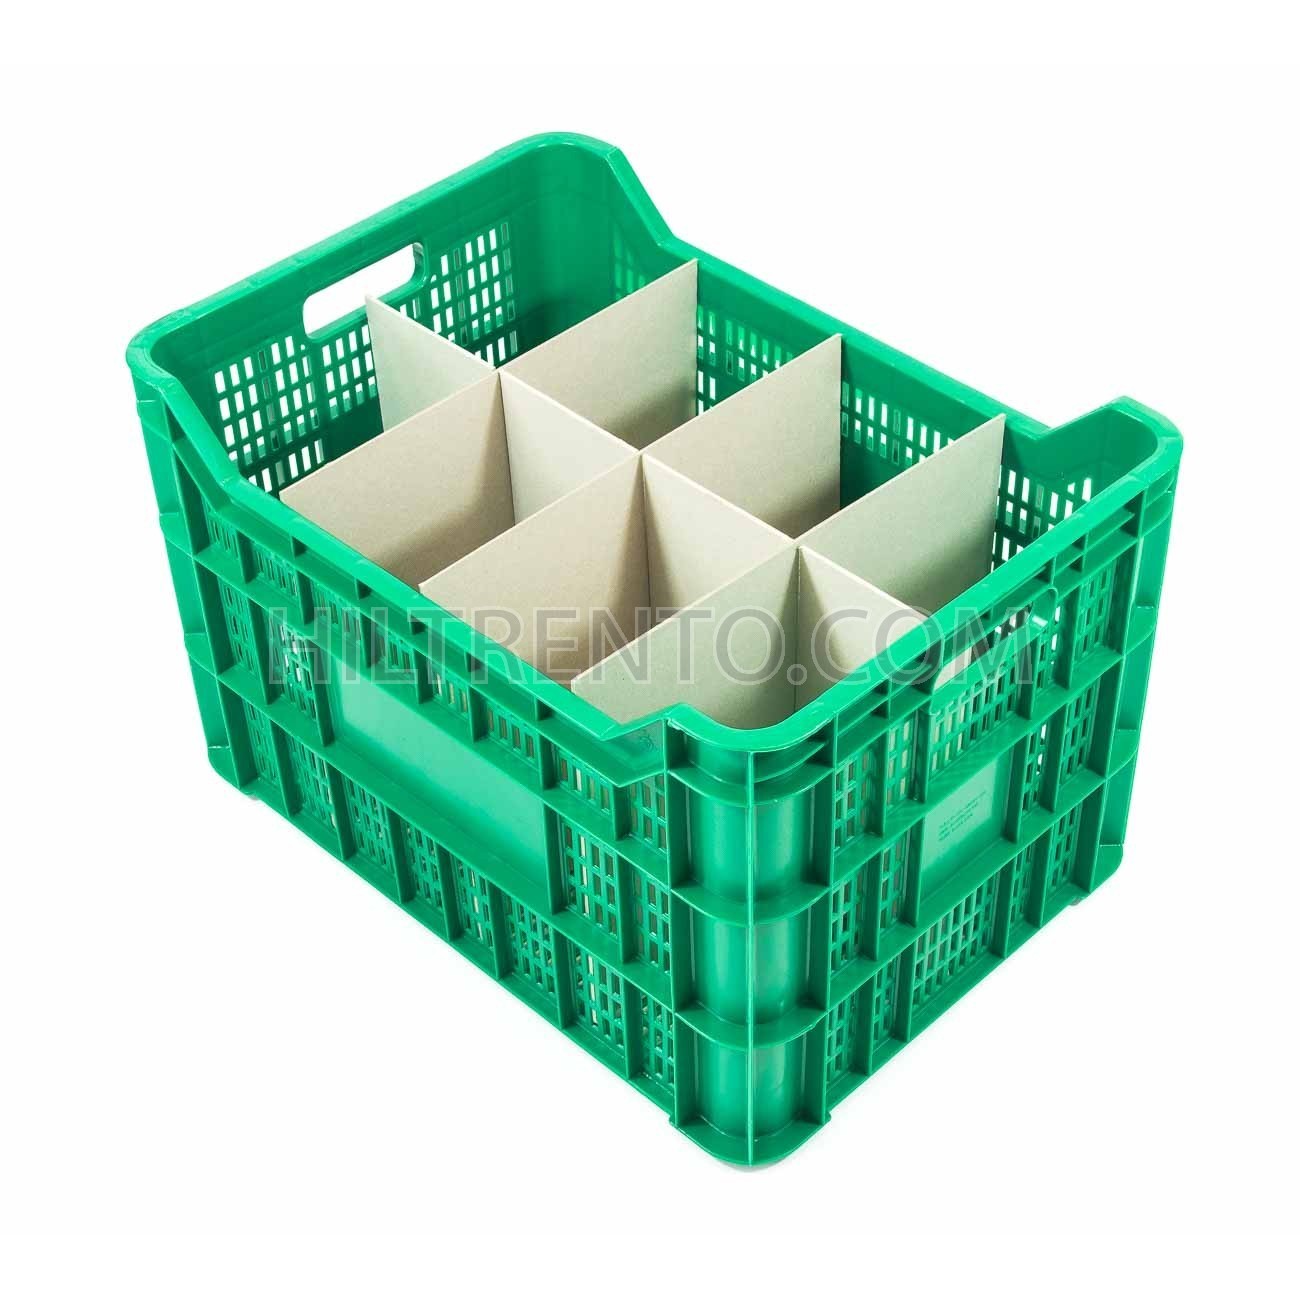 Cubeta apilable caja plástico verde con separadores 581x410x365 mm Ref.JC